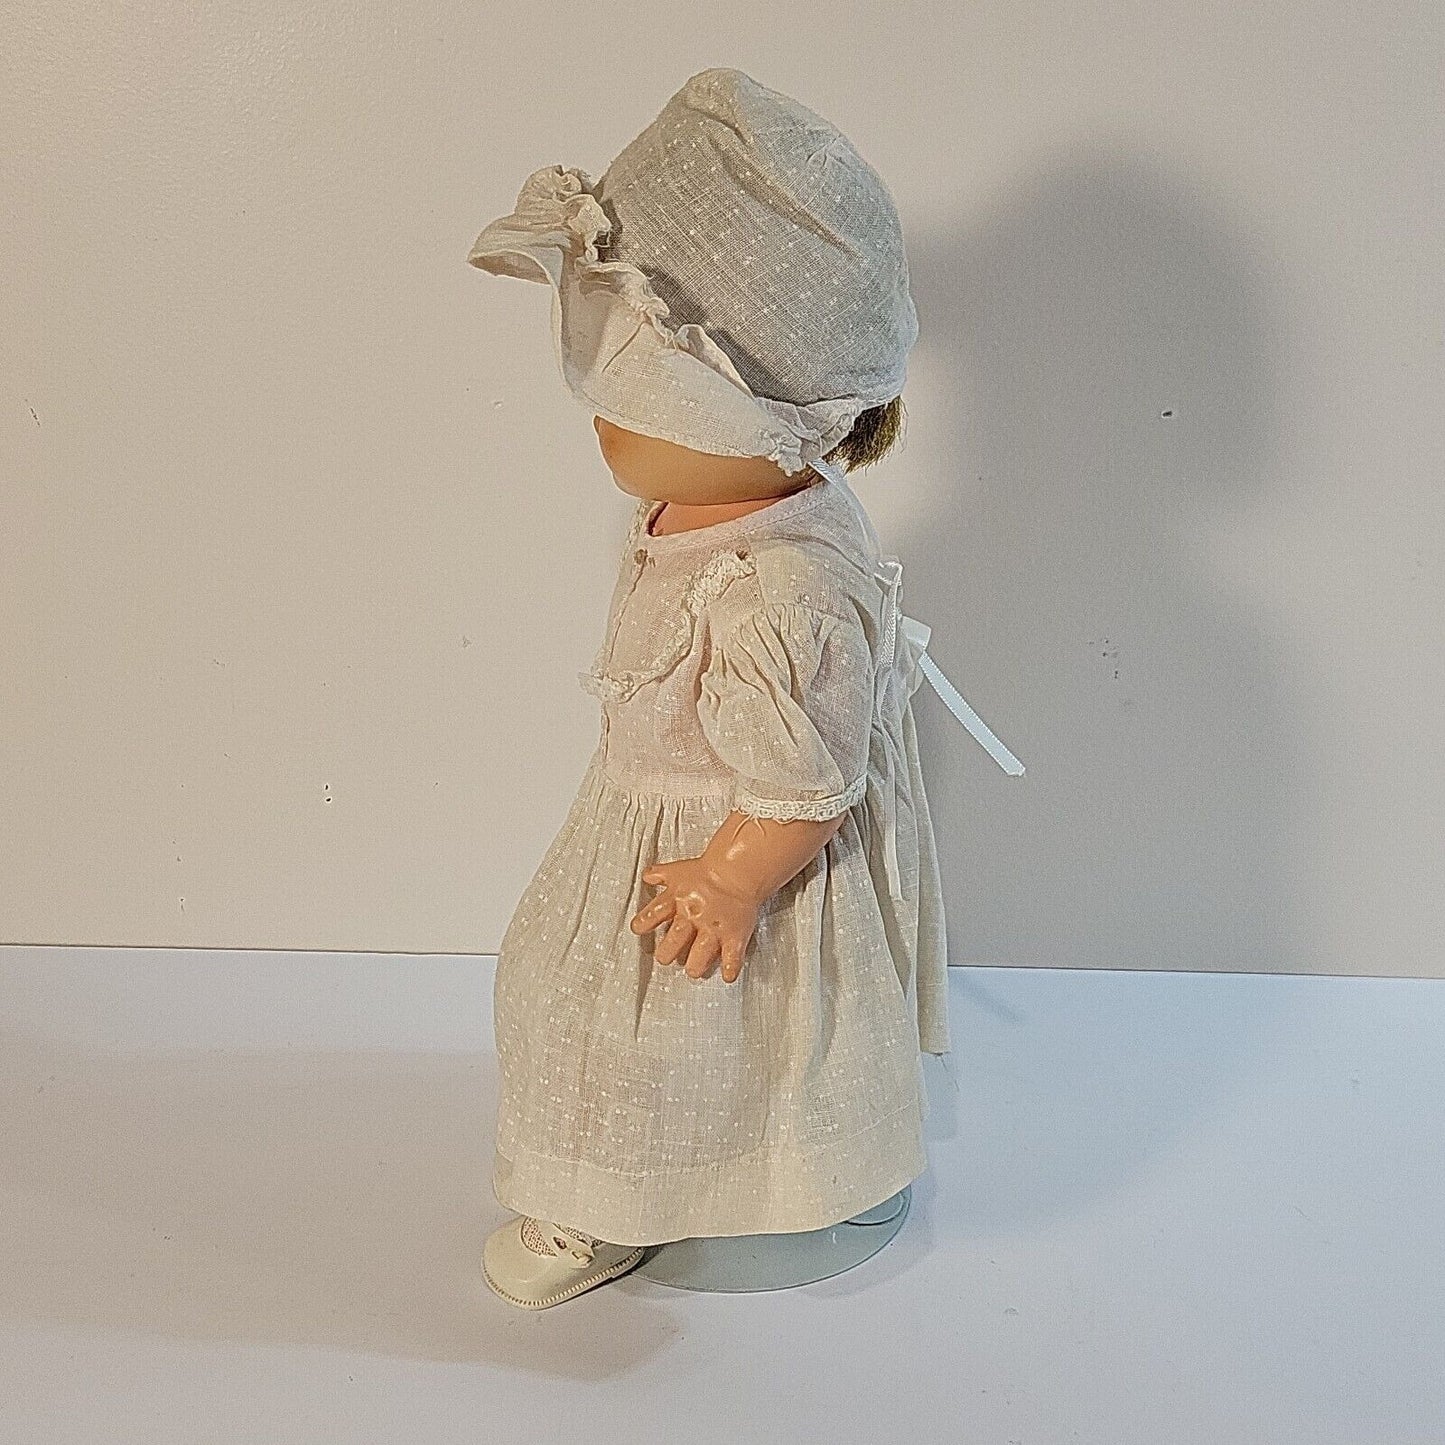 Original 1955-57 Horsman Baby Precious Doll 14" Horsman's Dolls